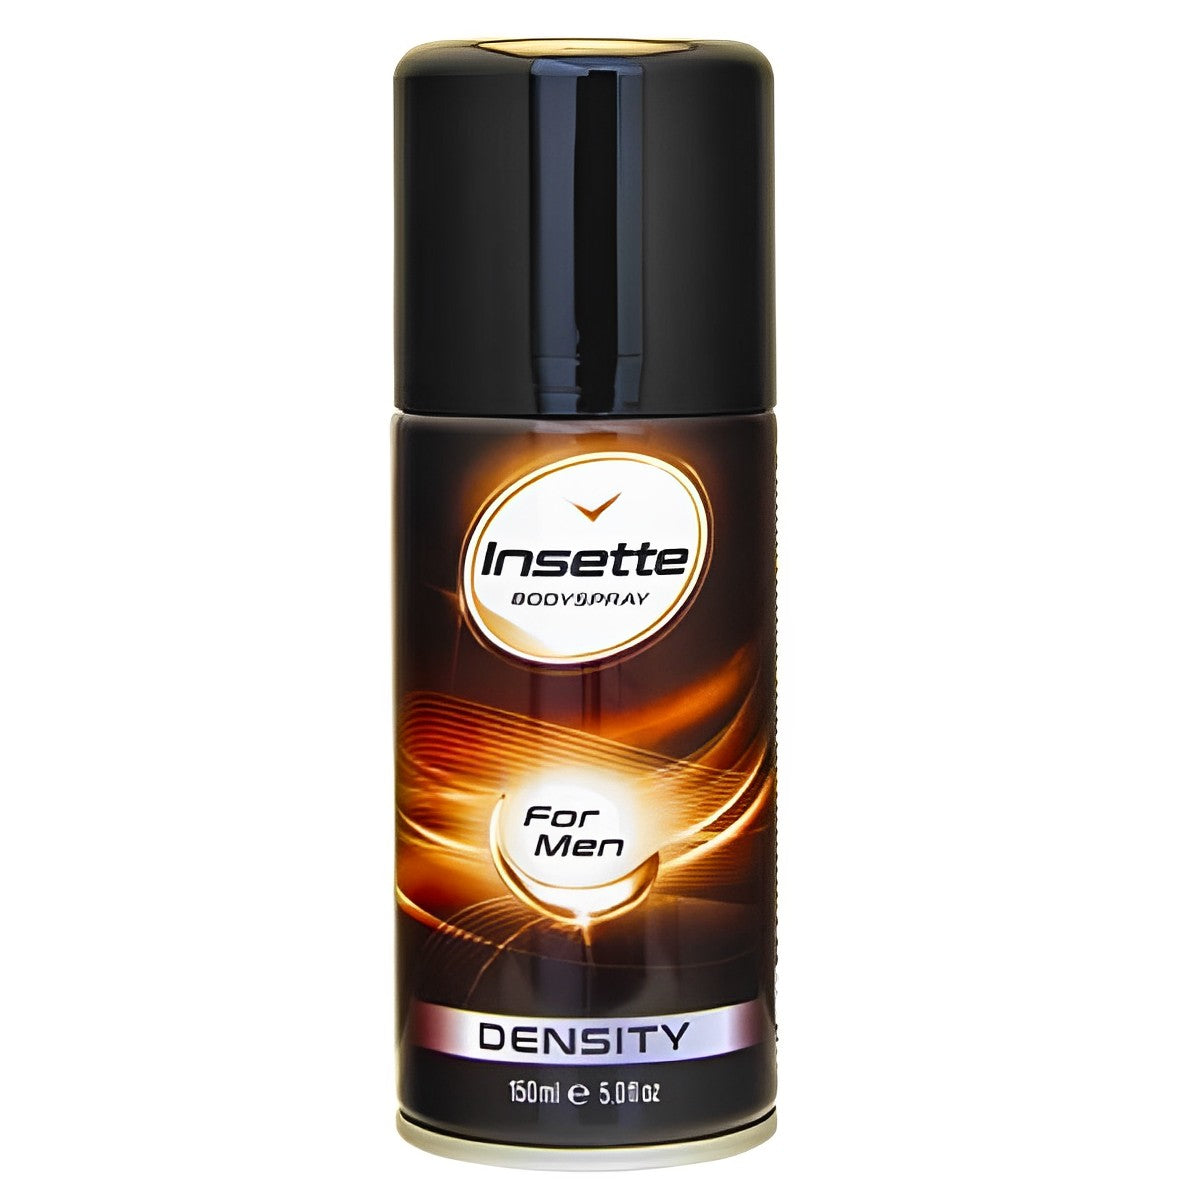 Insette - Density Men's Body Spray Lynx Dimens - 150ml - Continental Food Store